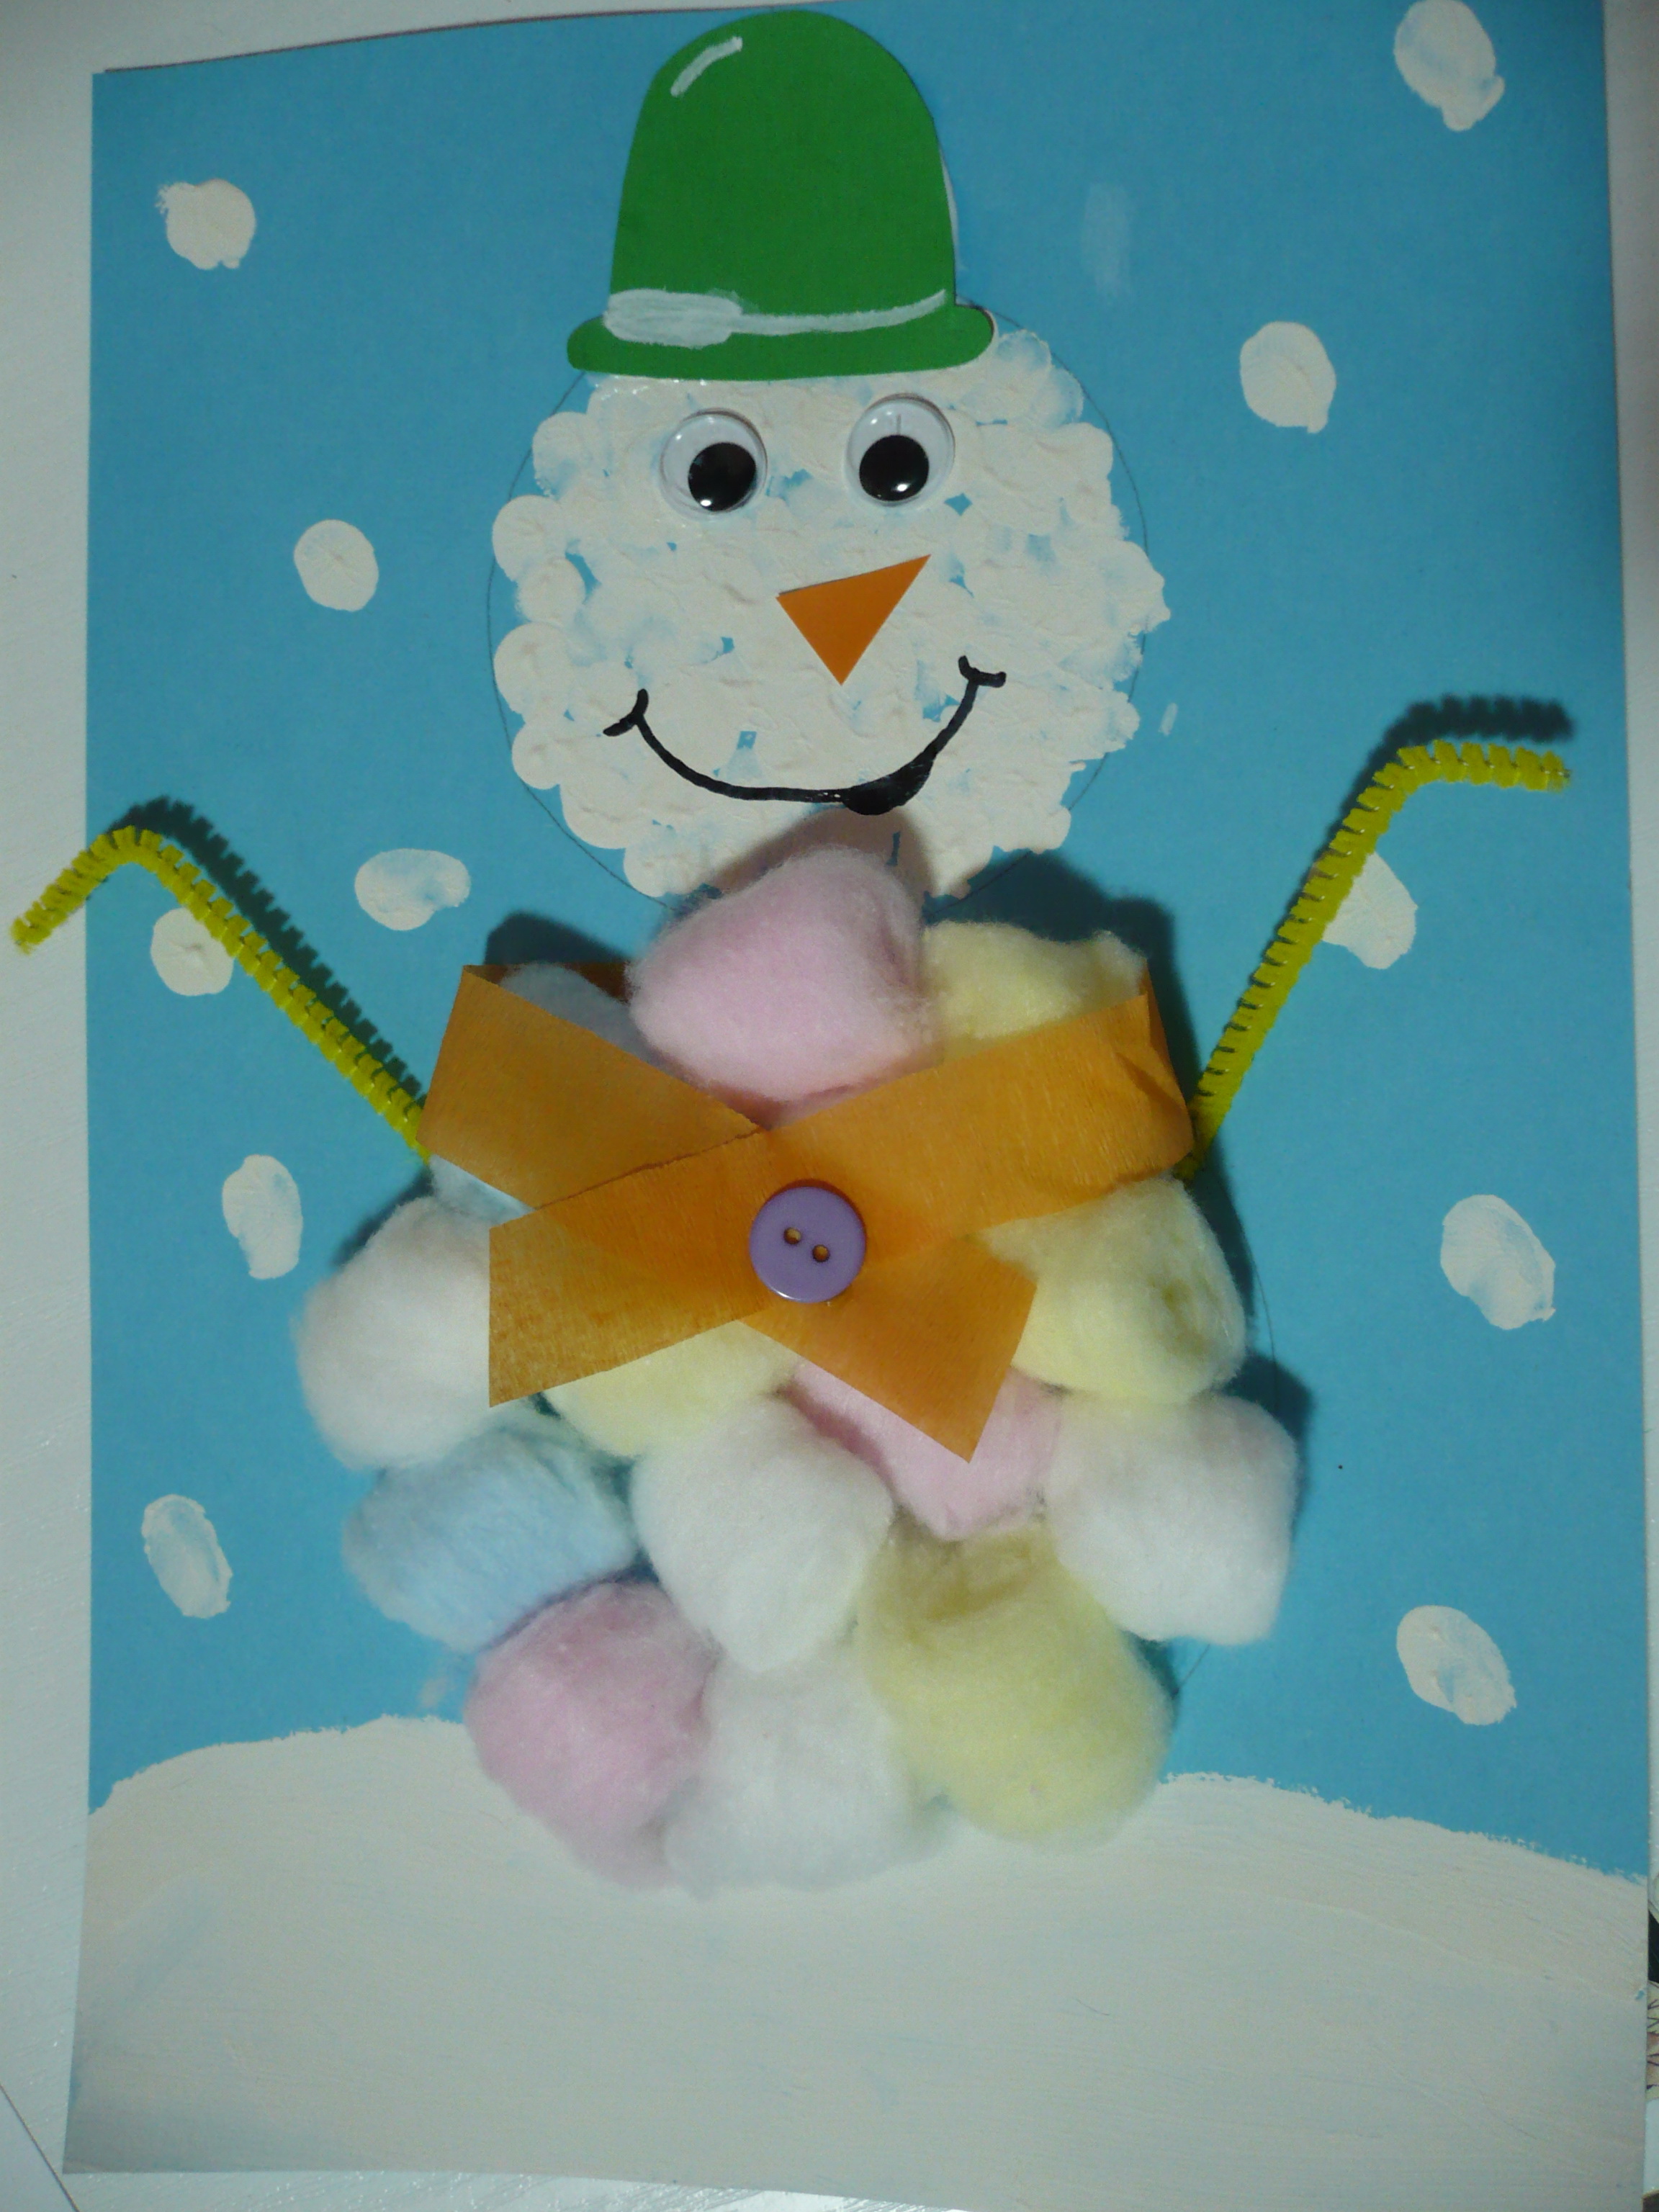 cotton-ball-snowman-fun-family-crafts